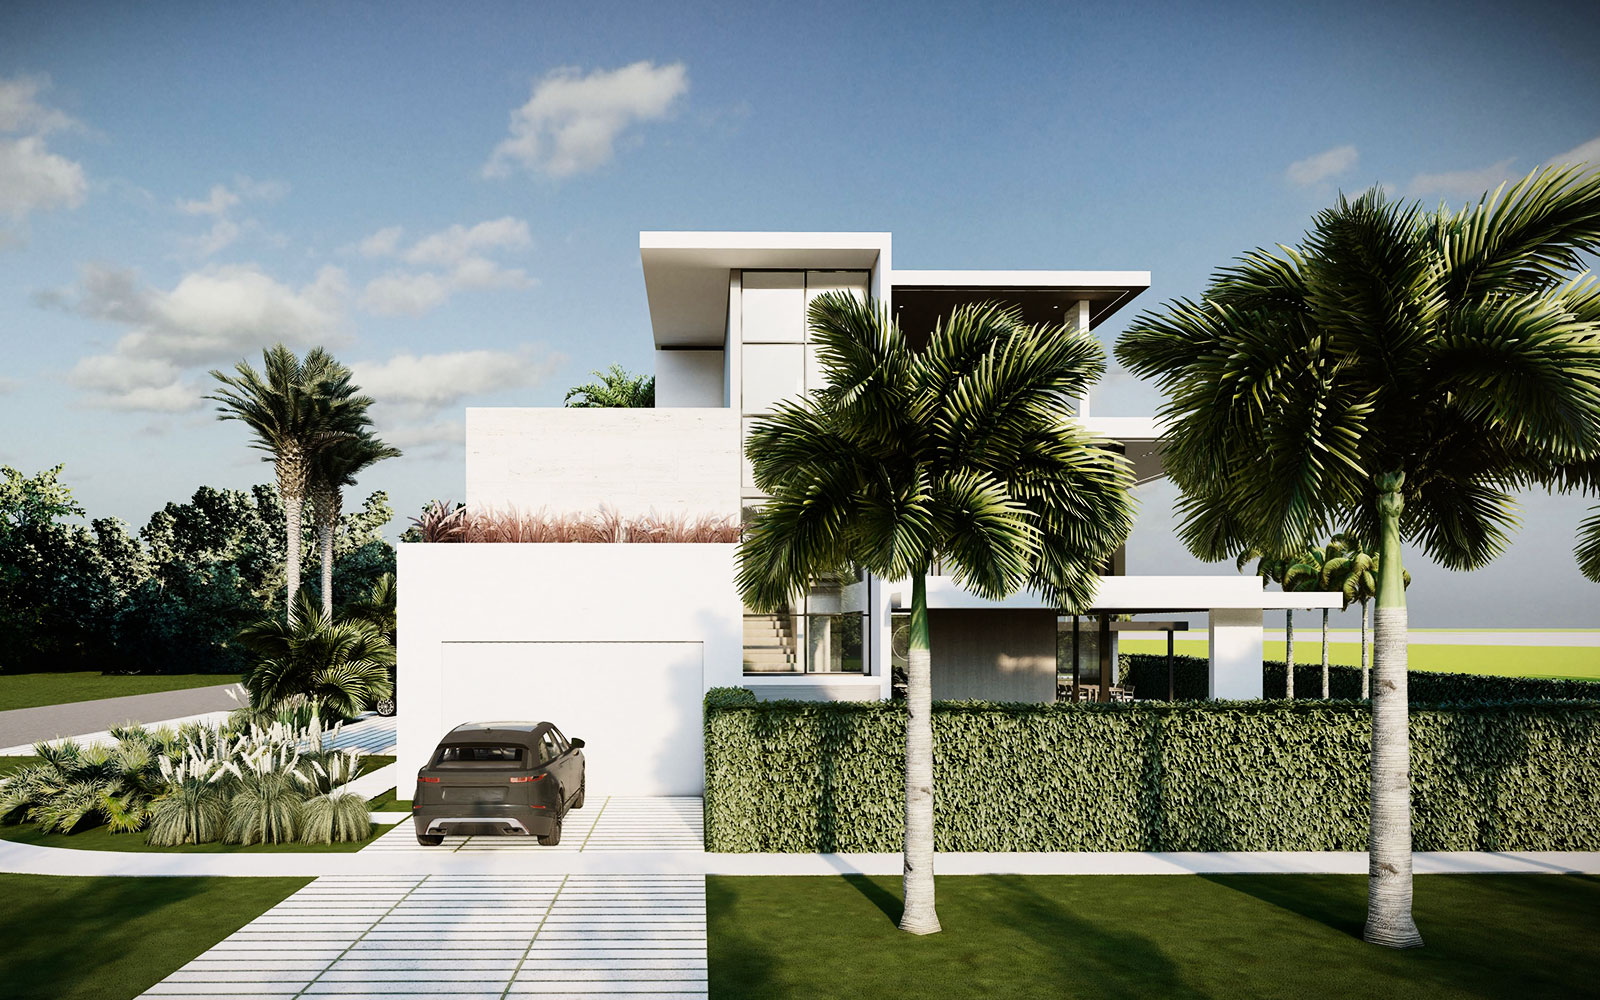 Empire Development Launches Sales for 9 Boca Raton Spec Homes